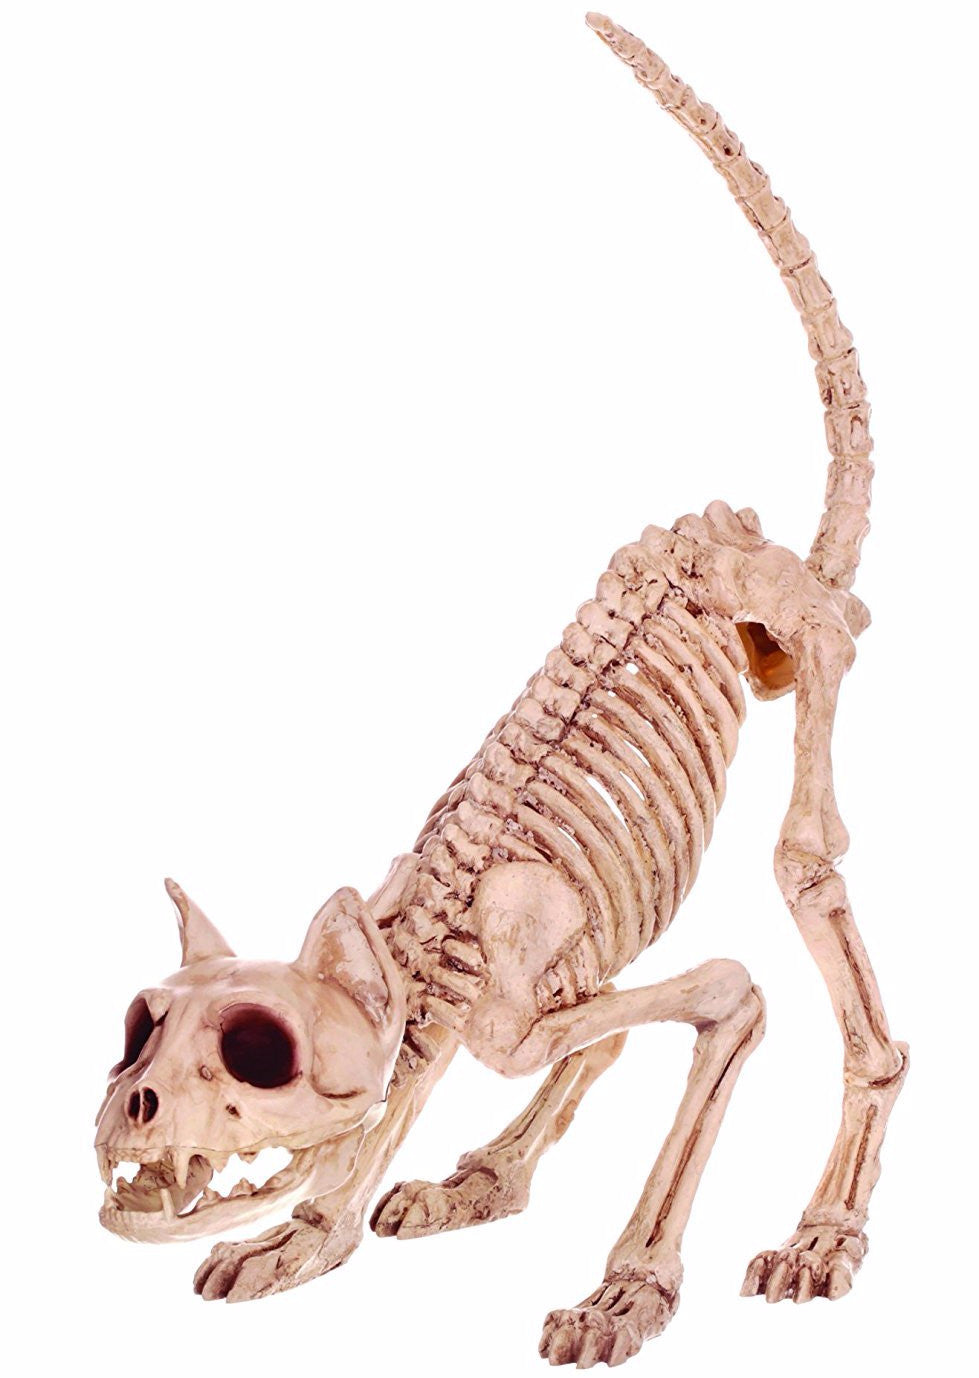 Kitty Cat Skeleton - Ready to Pounce